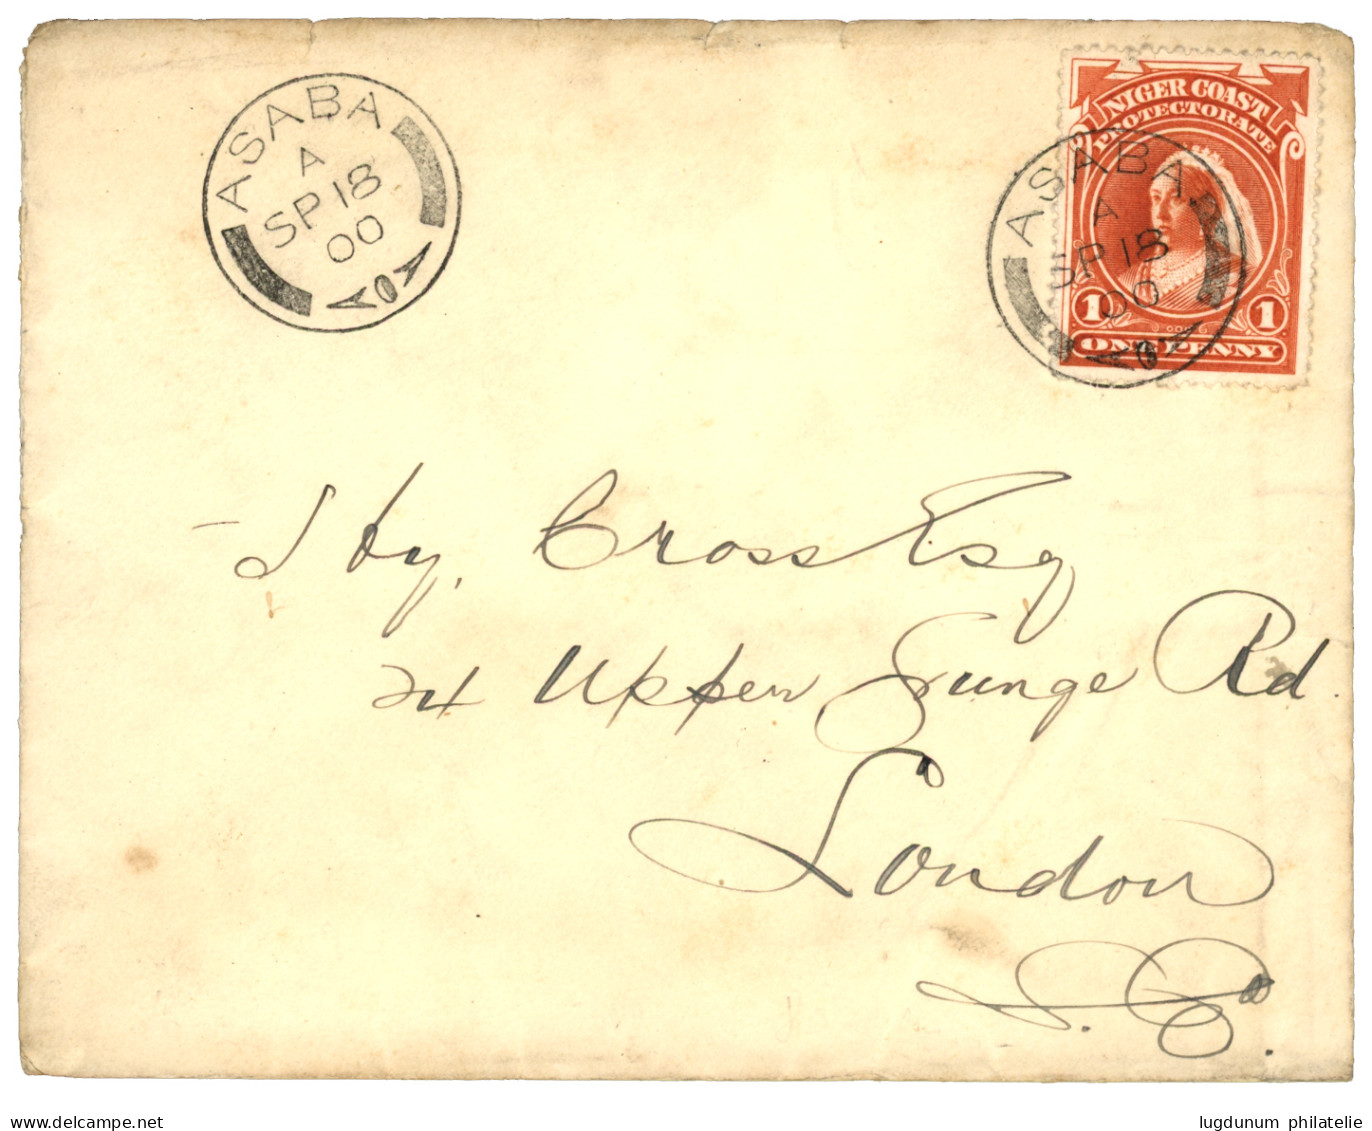 NIGER COAST : 1900 1d Canc. ASABA On Envelope To ENGLAND. Scarce. Superb. - Nigeria (...-1960)